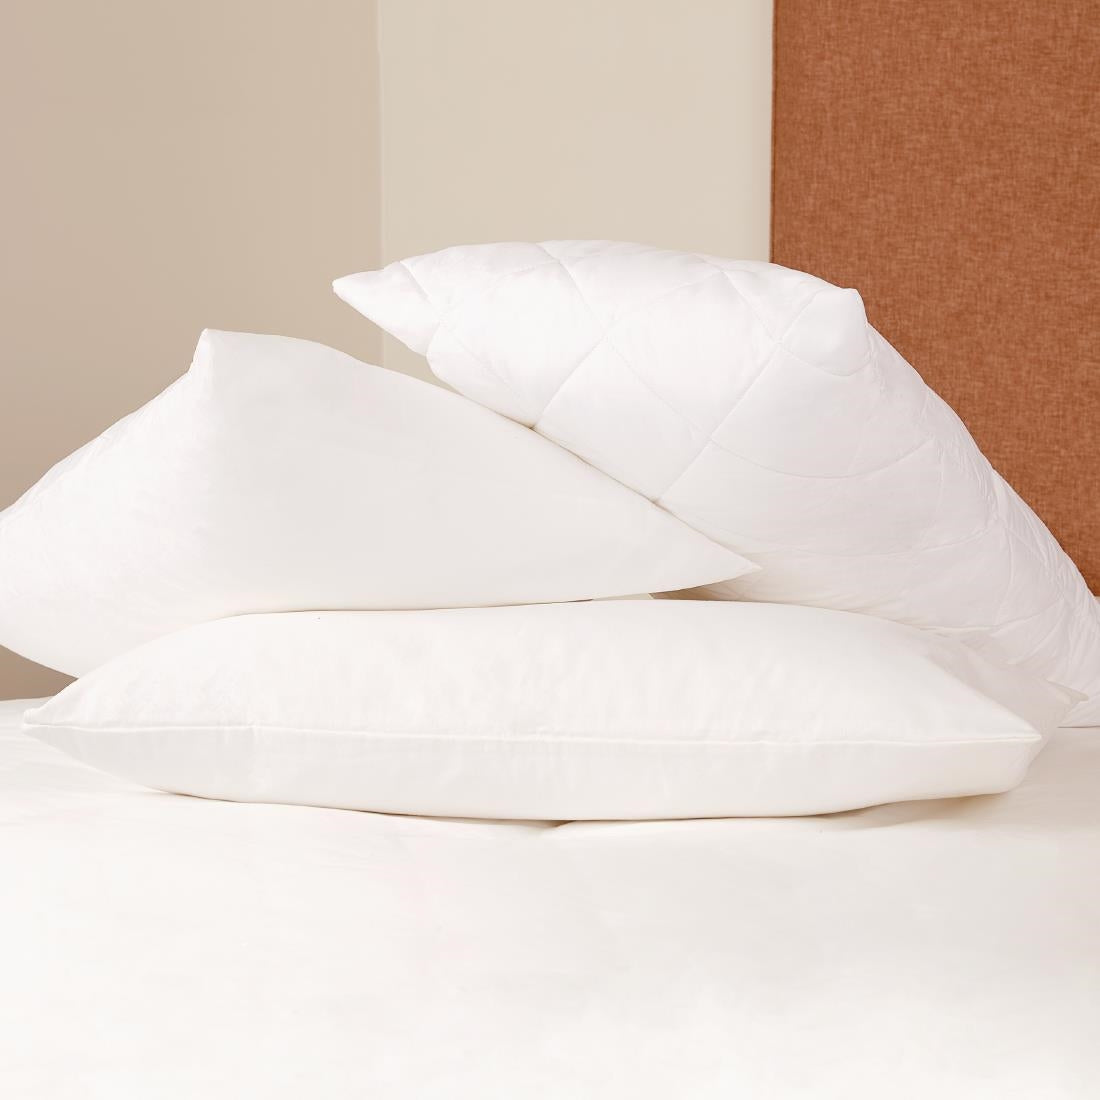 GT833 Mitre Comfort Quiltop Pillow Protector